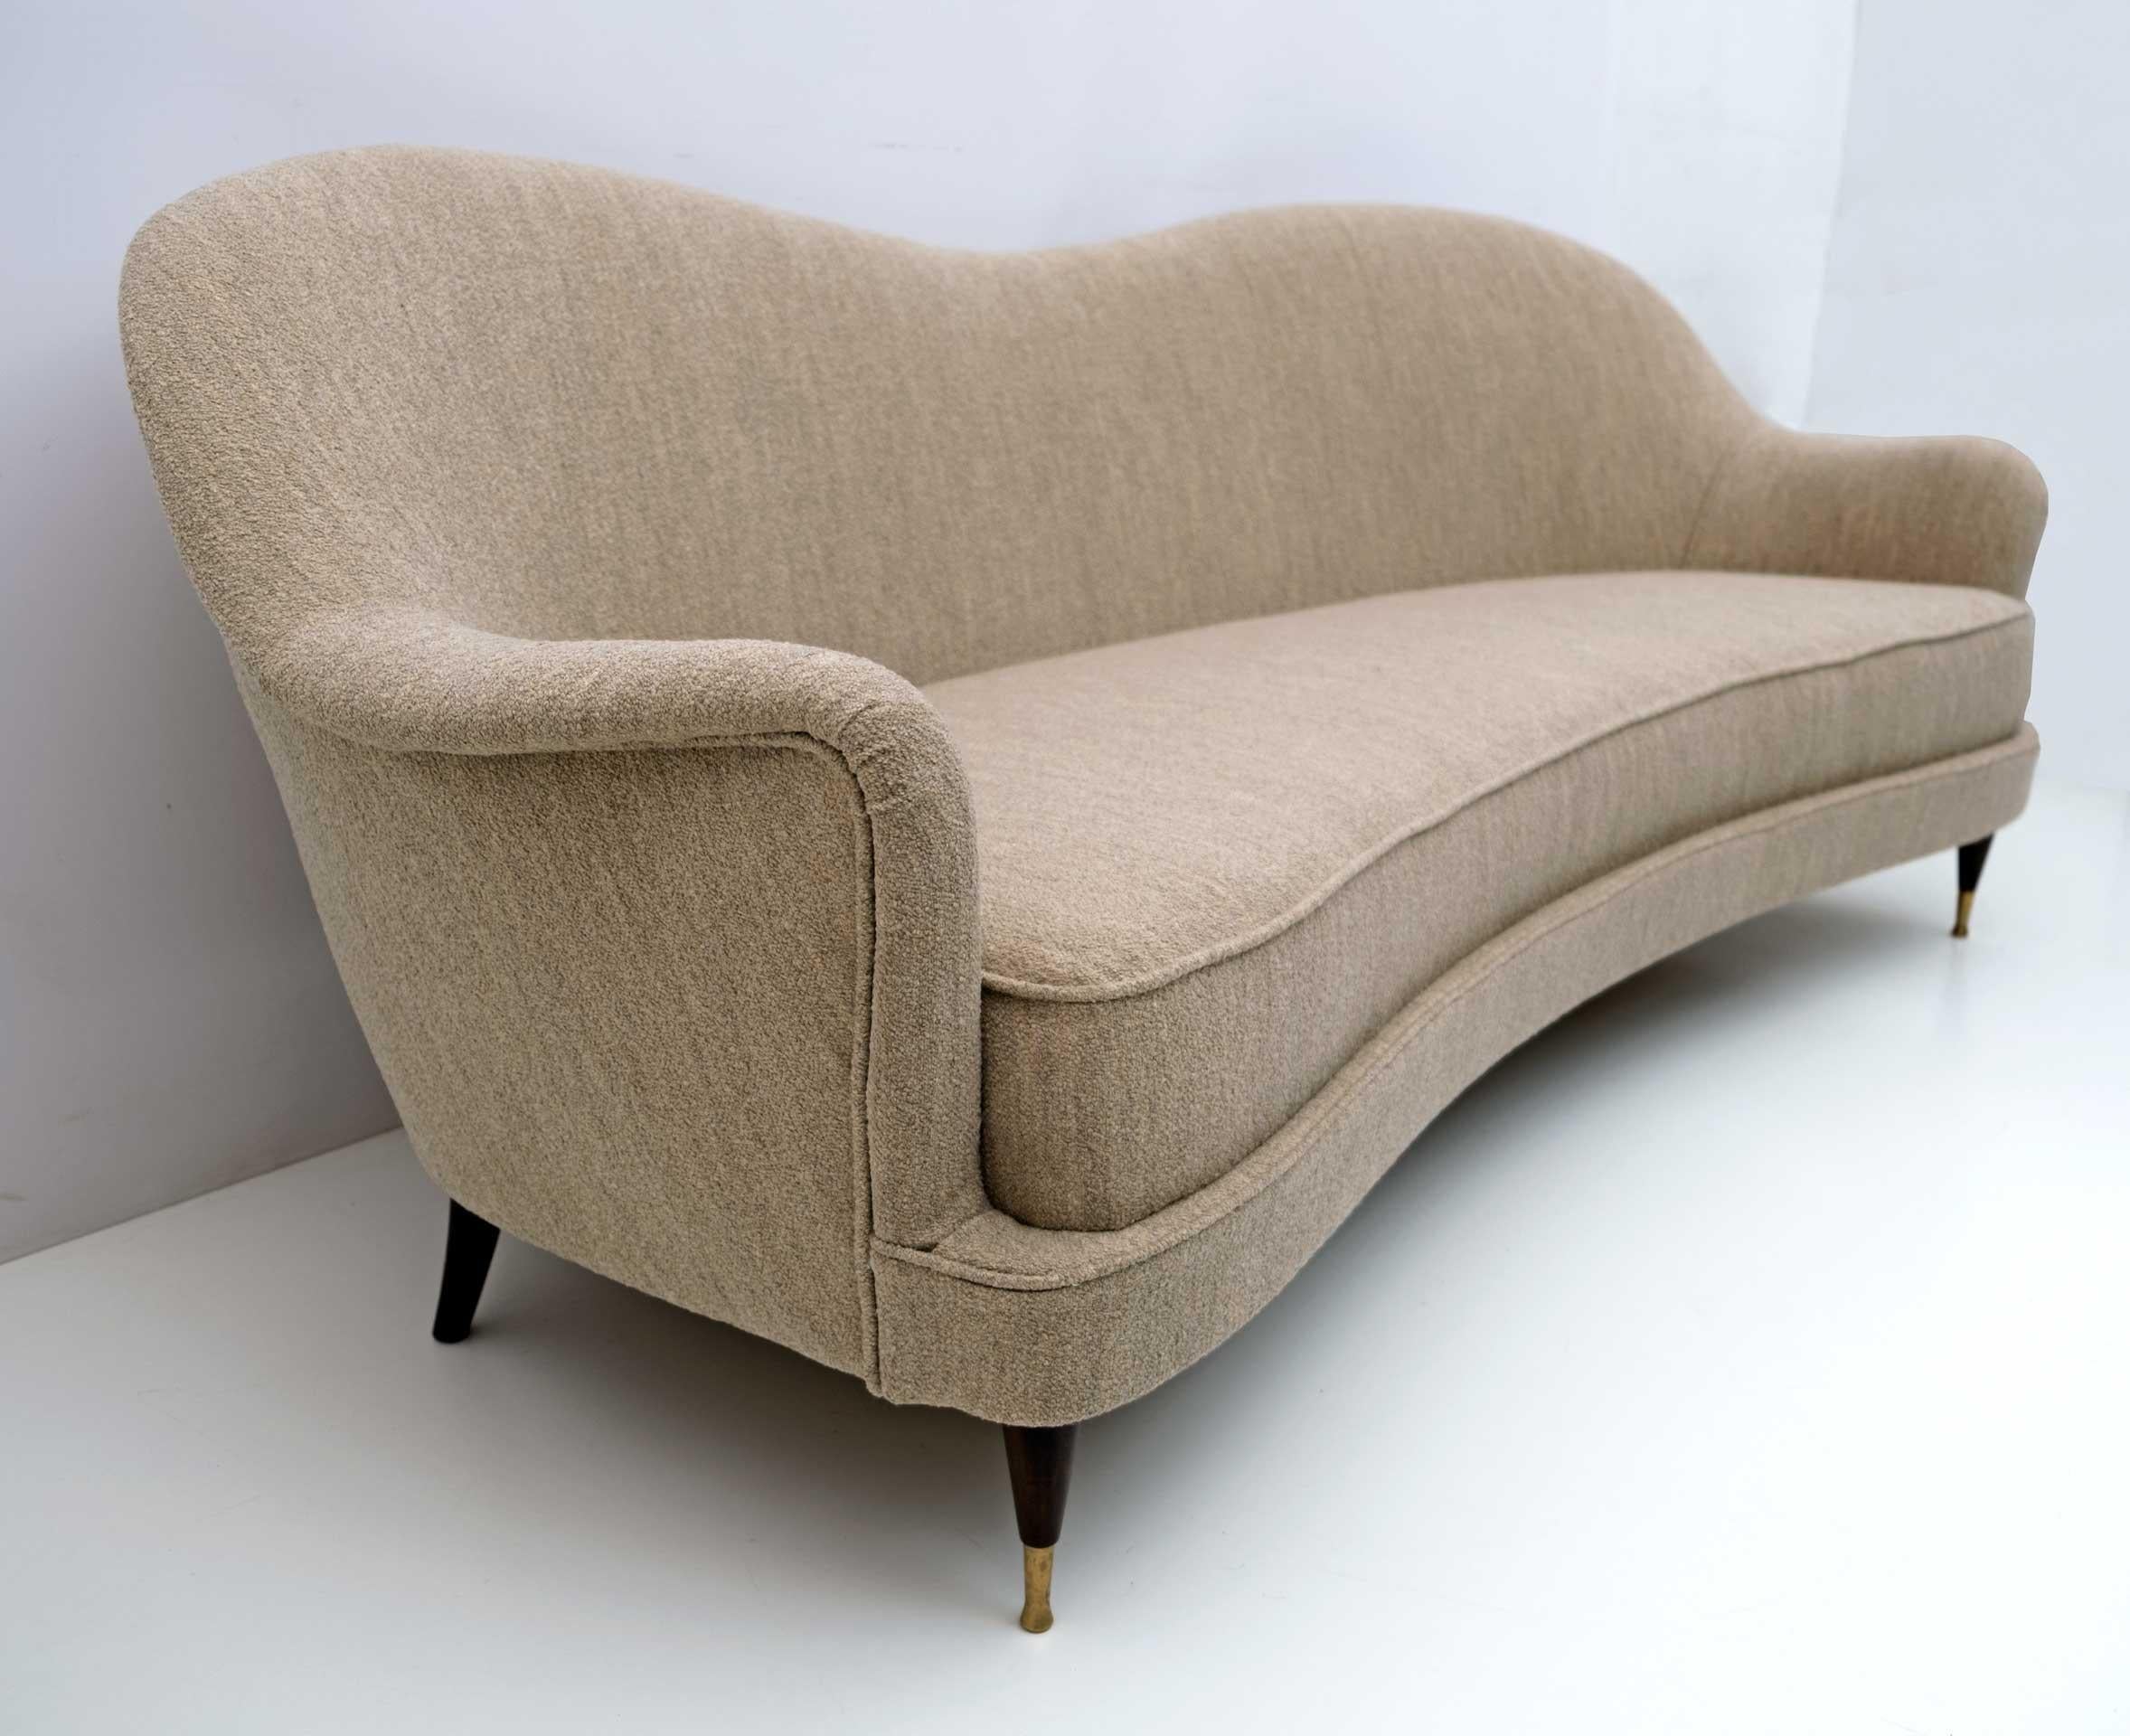 Beech Gio Ponti Style Mid-Century Modern Italian Sofa for Isa Bergamo, 50s For Sale